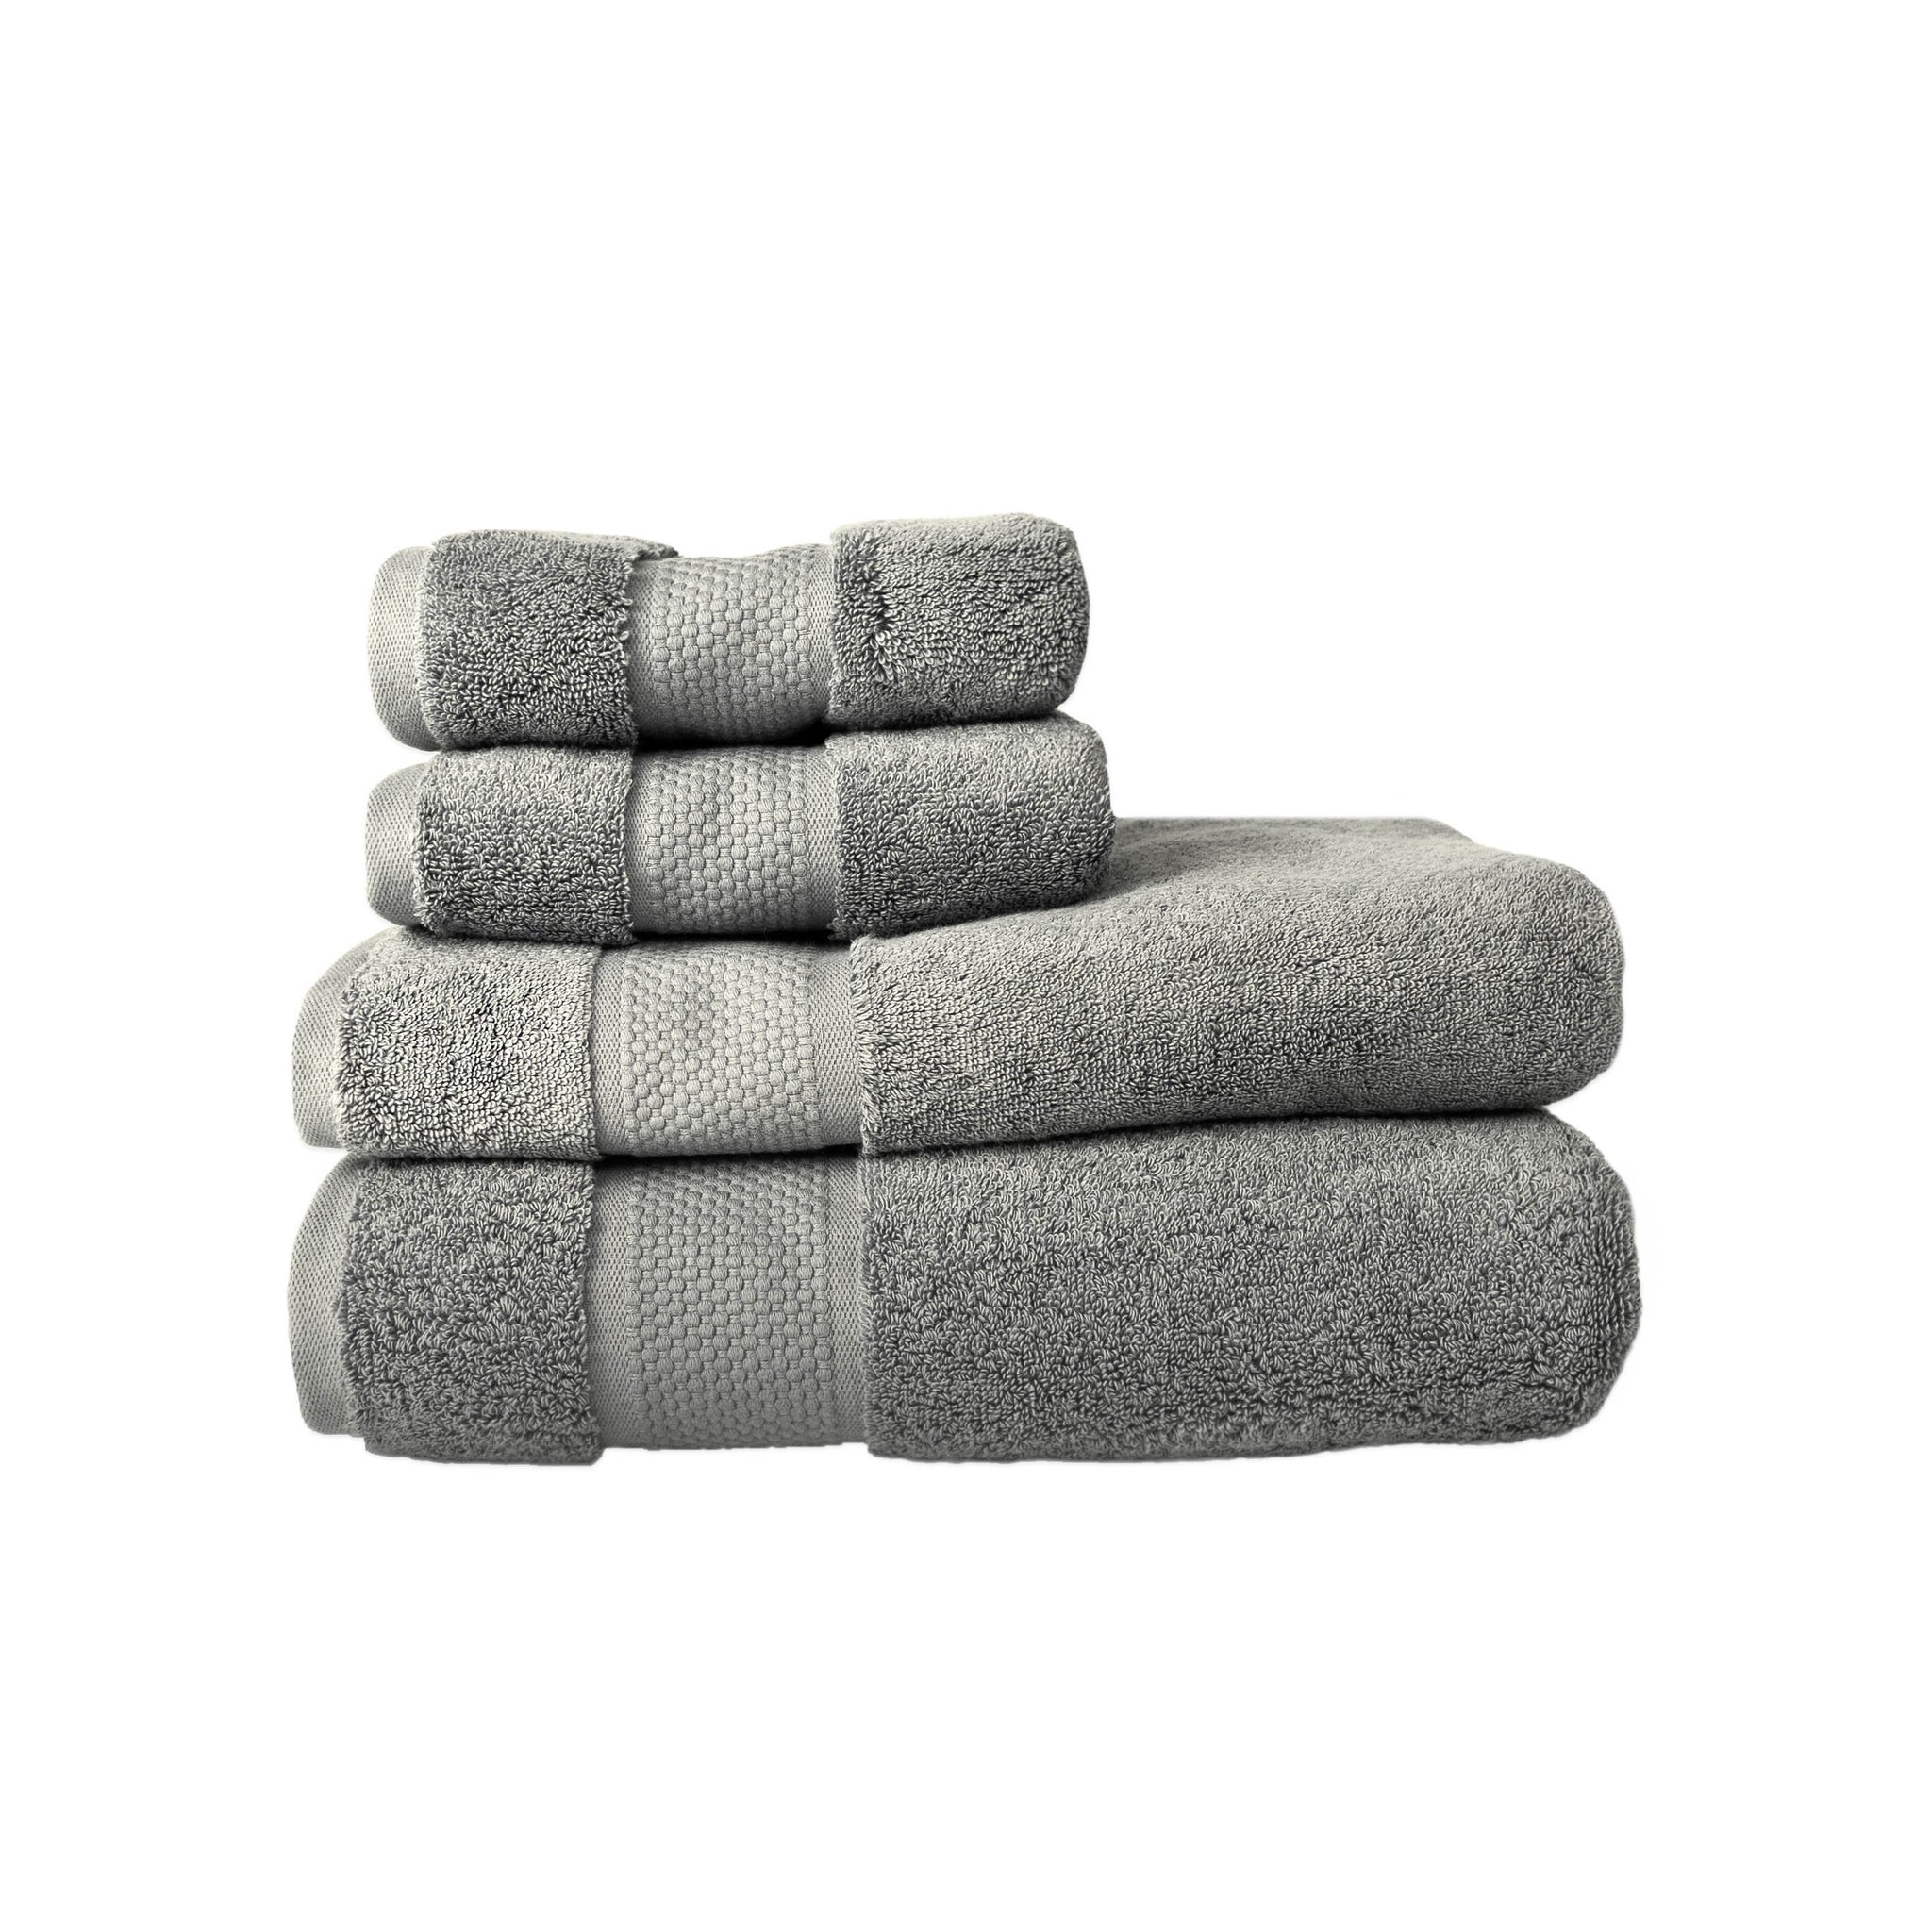 Plush Organic Bath Towel Set – SpaceBlue: Sustainable Home Furnishing -  Graphene & More